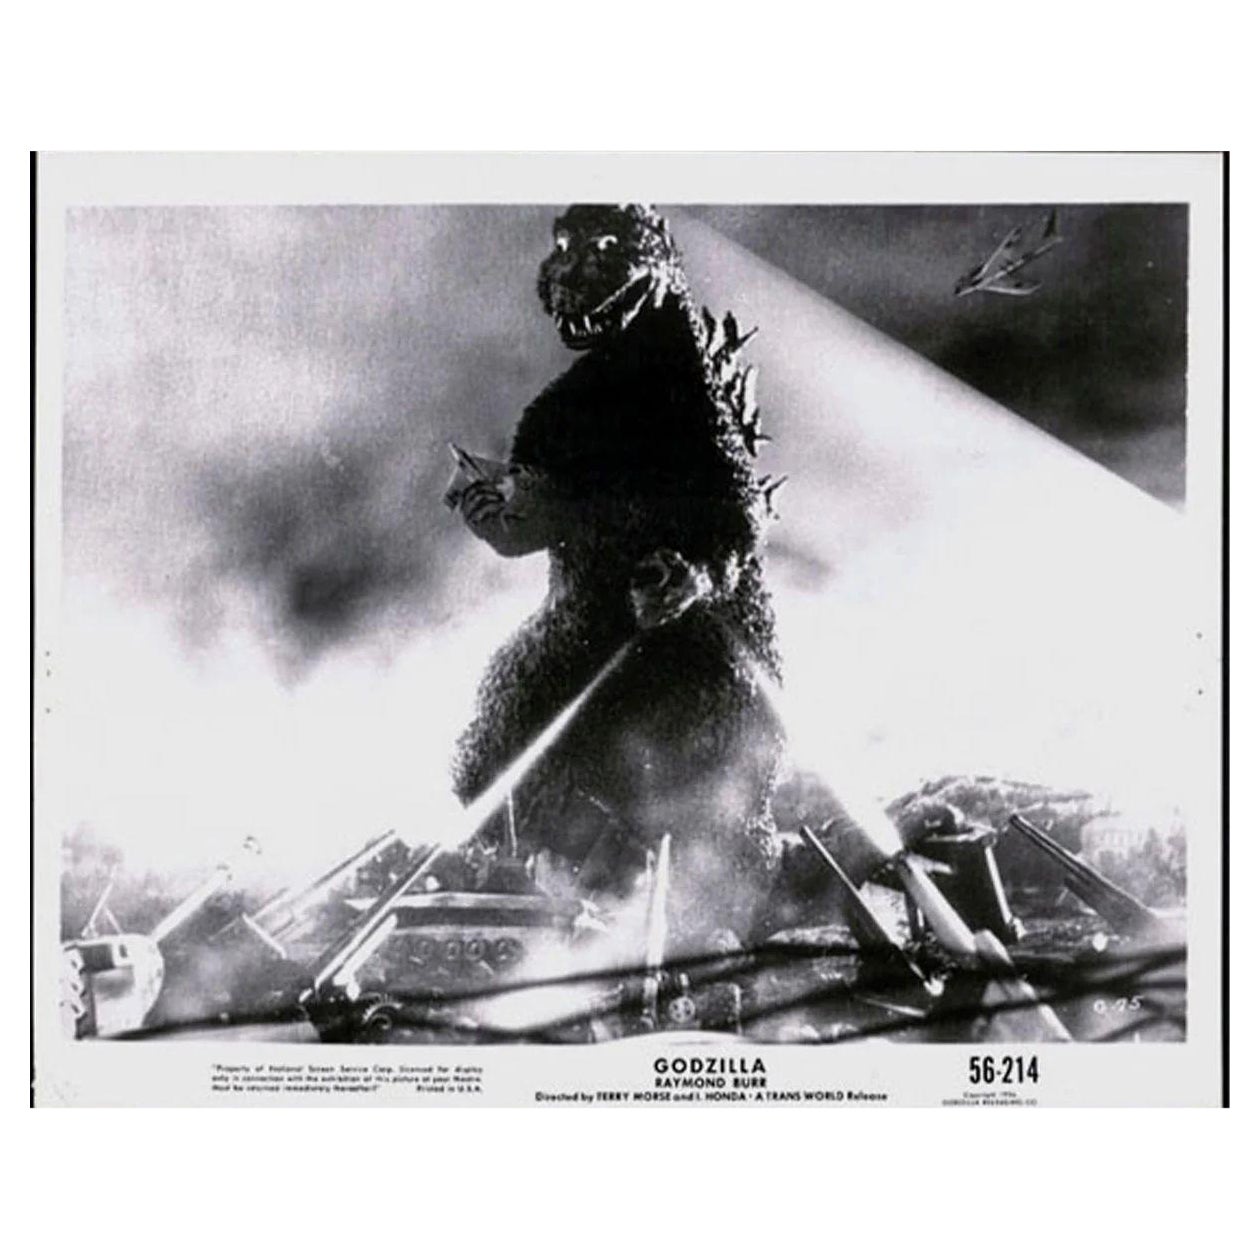 Godzilla, Unframed Poster, 1956 For Sale